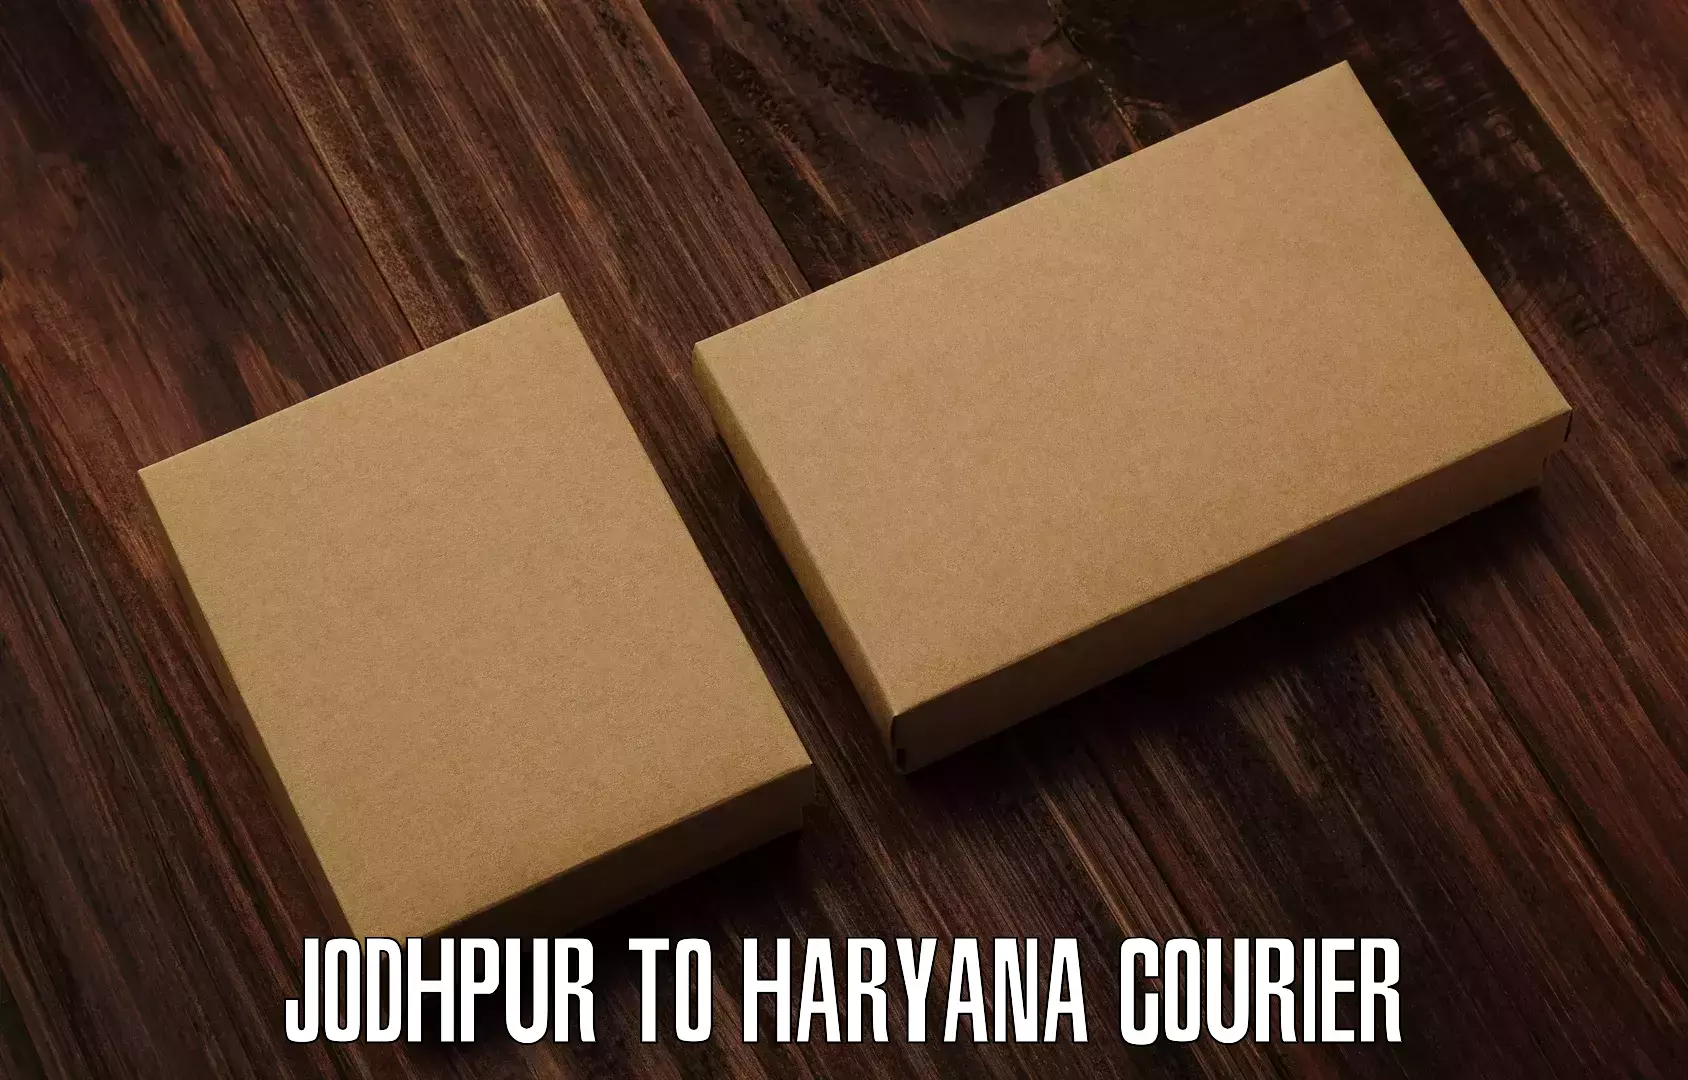 Express delivery network Jodhpur to Bilaspur Haryana